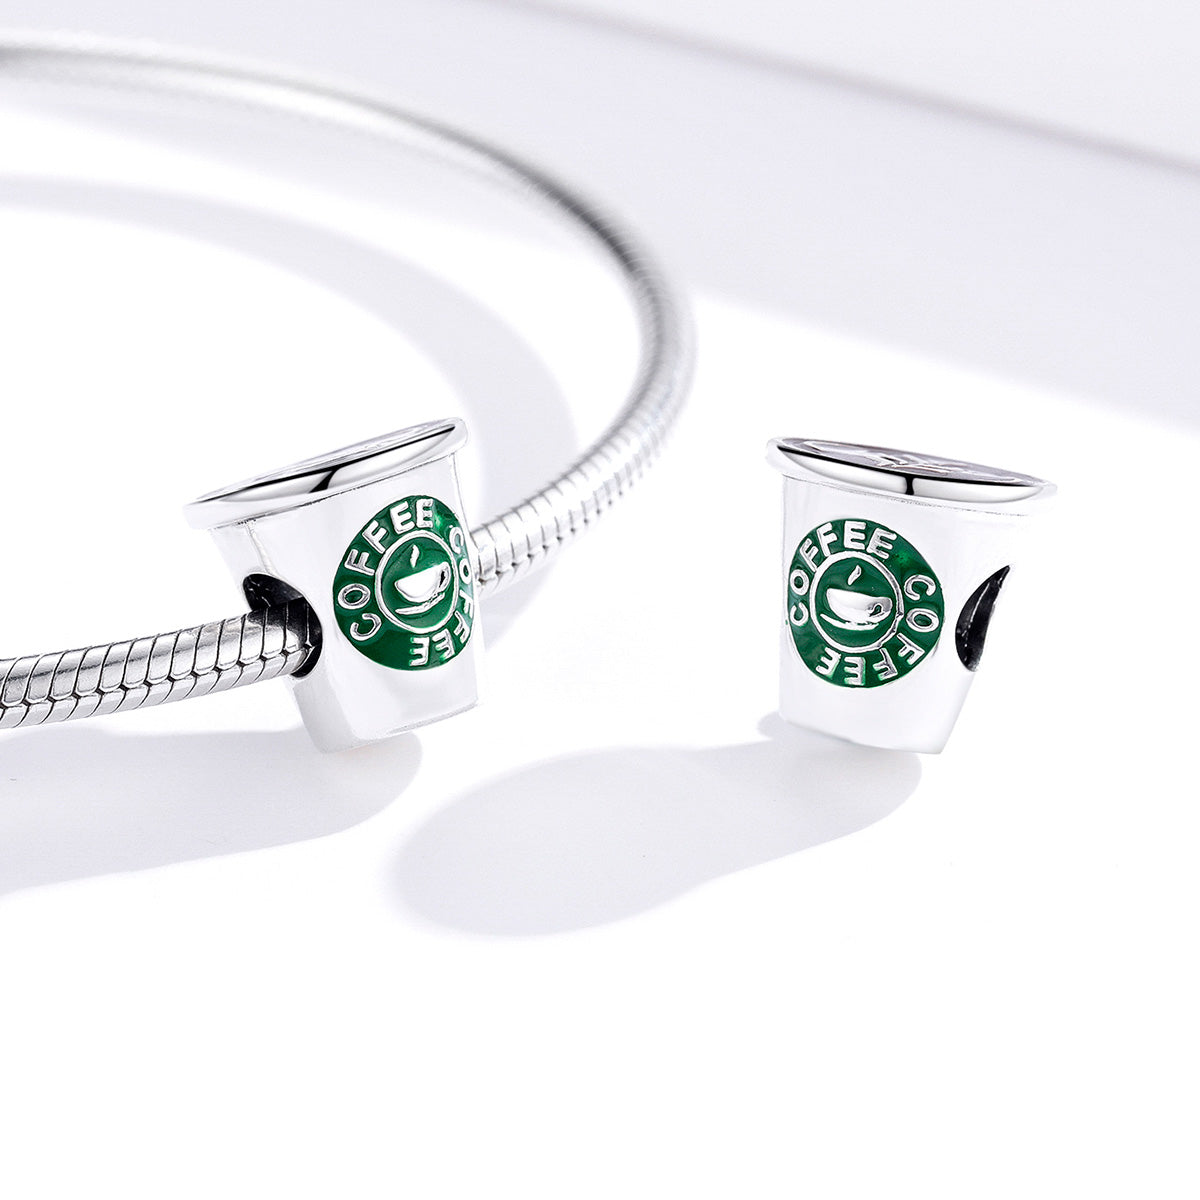 Sterling 925 silver charm the Starbucks coffee bead pendant fits Pandora charm and European charm bracelet Xaxe.com